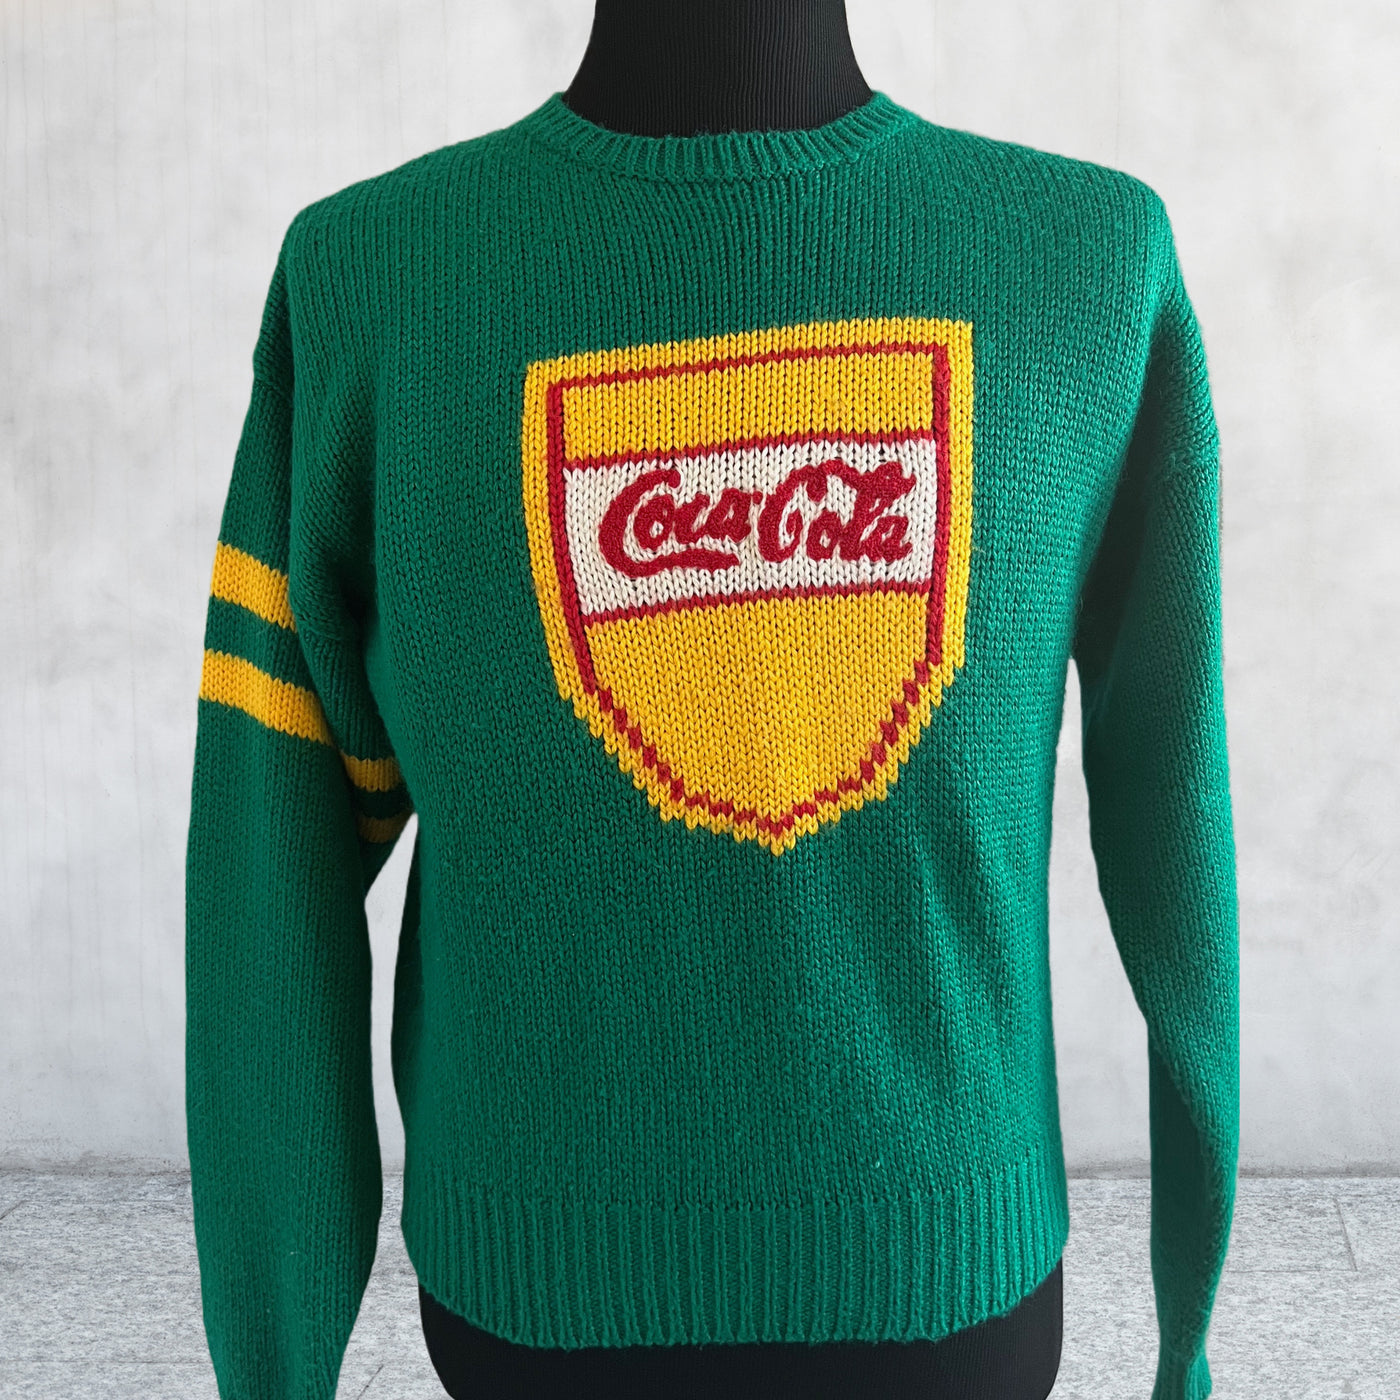 Vintage 80s Coca Cola Unisex sweater green and yellow. Medium